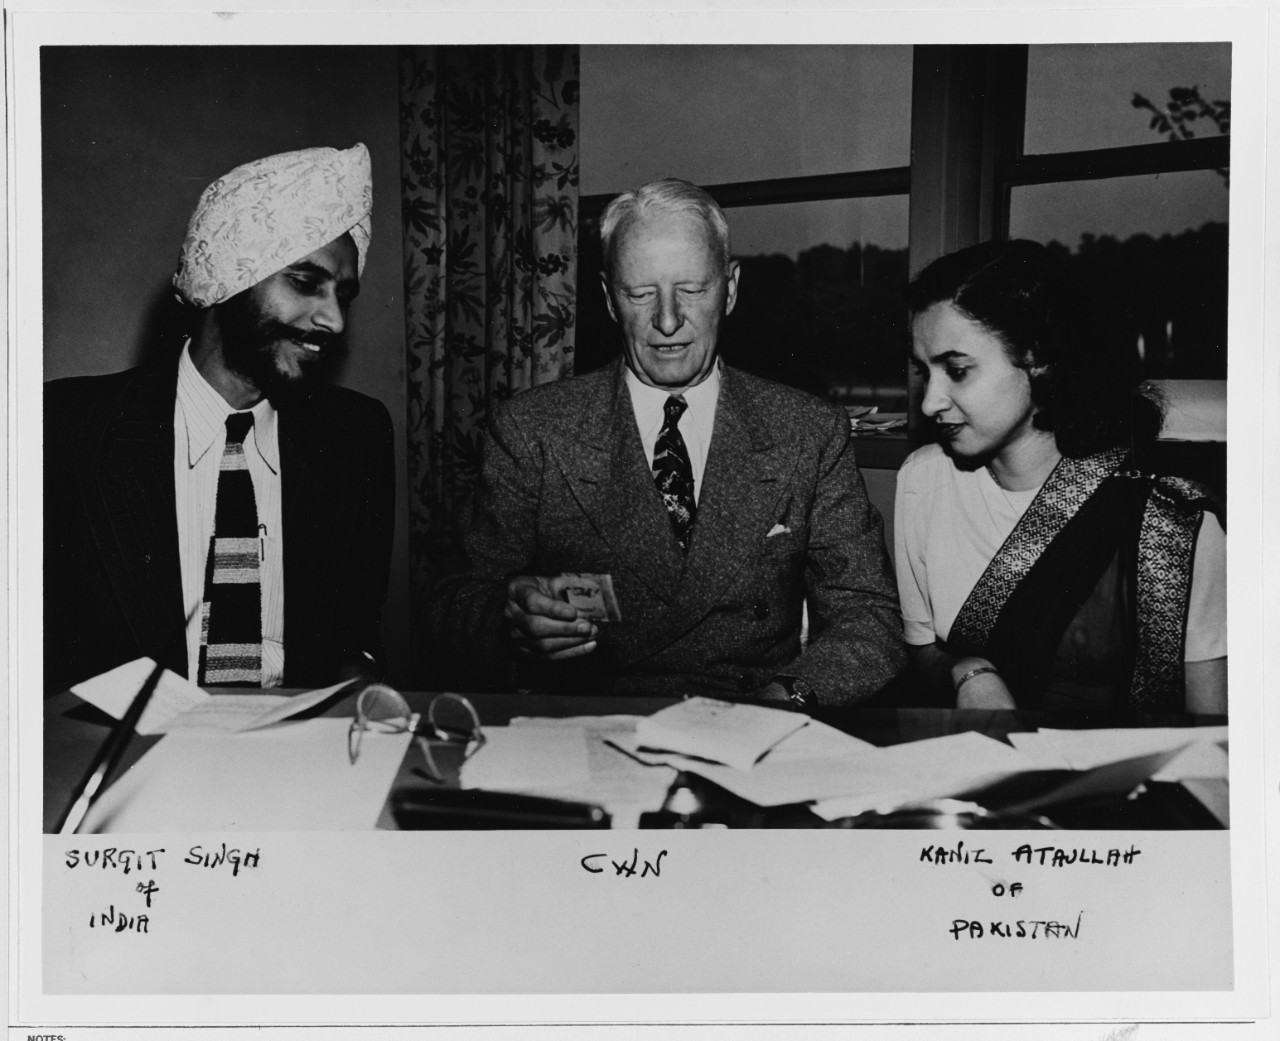 Fleet Admiral Nimitz with Surgit Singh of India and Kaniz Ataullah of Pakistan